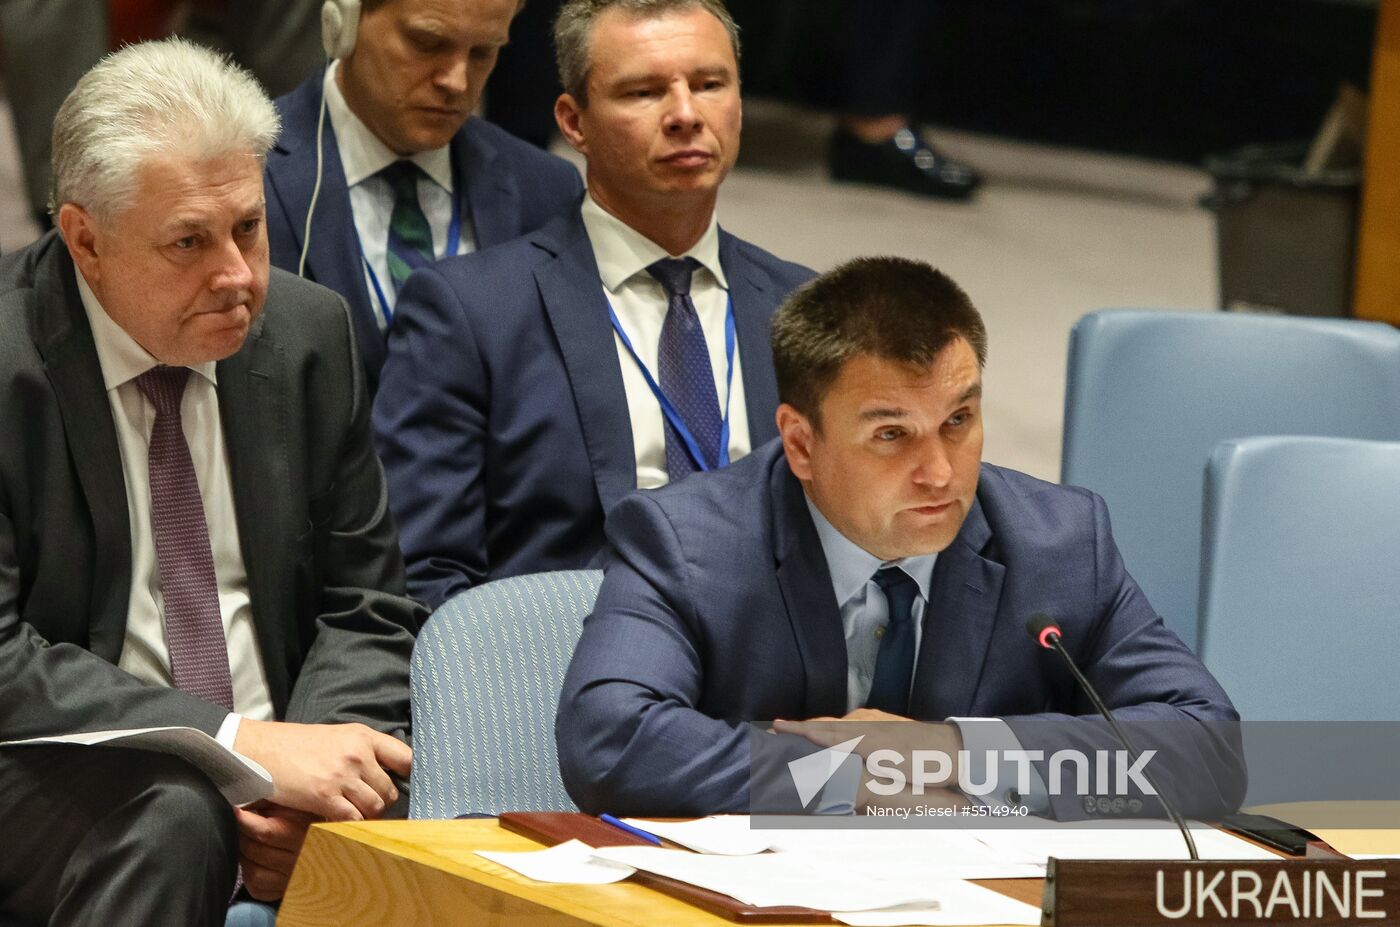 UN Security Council meeting